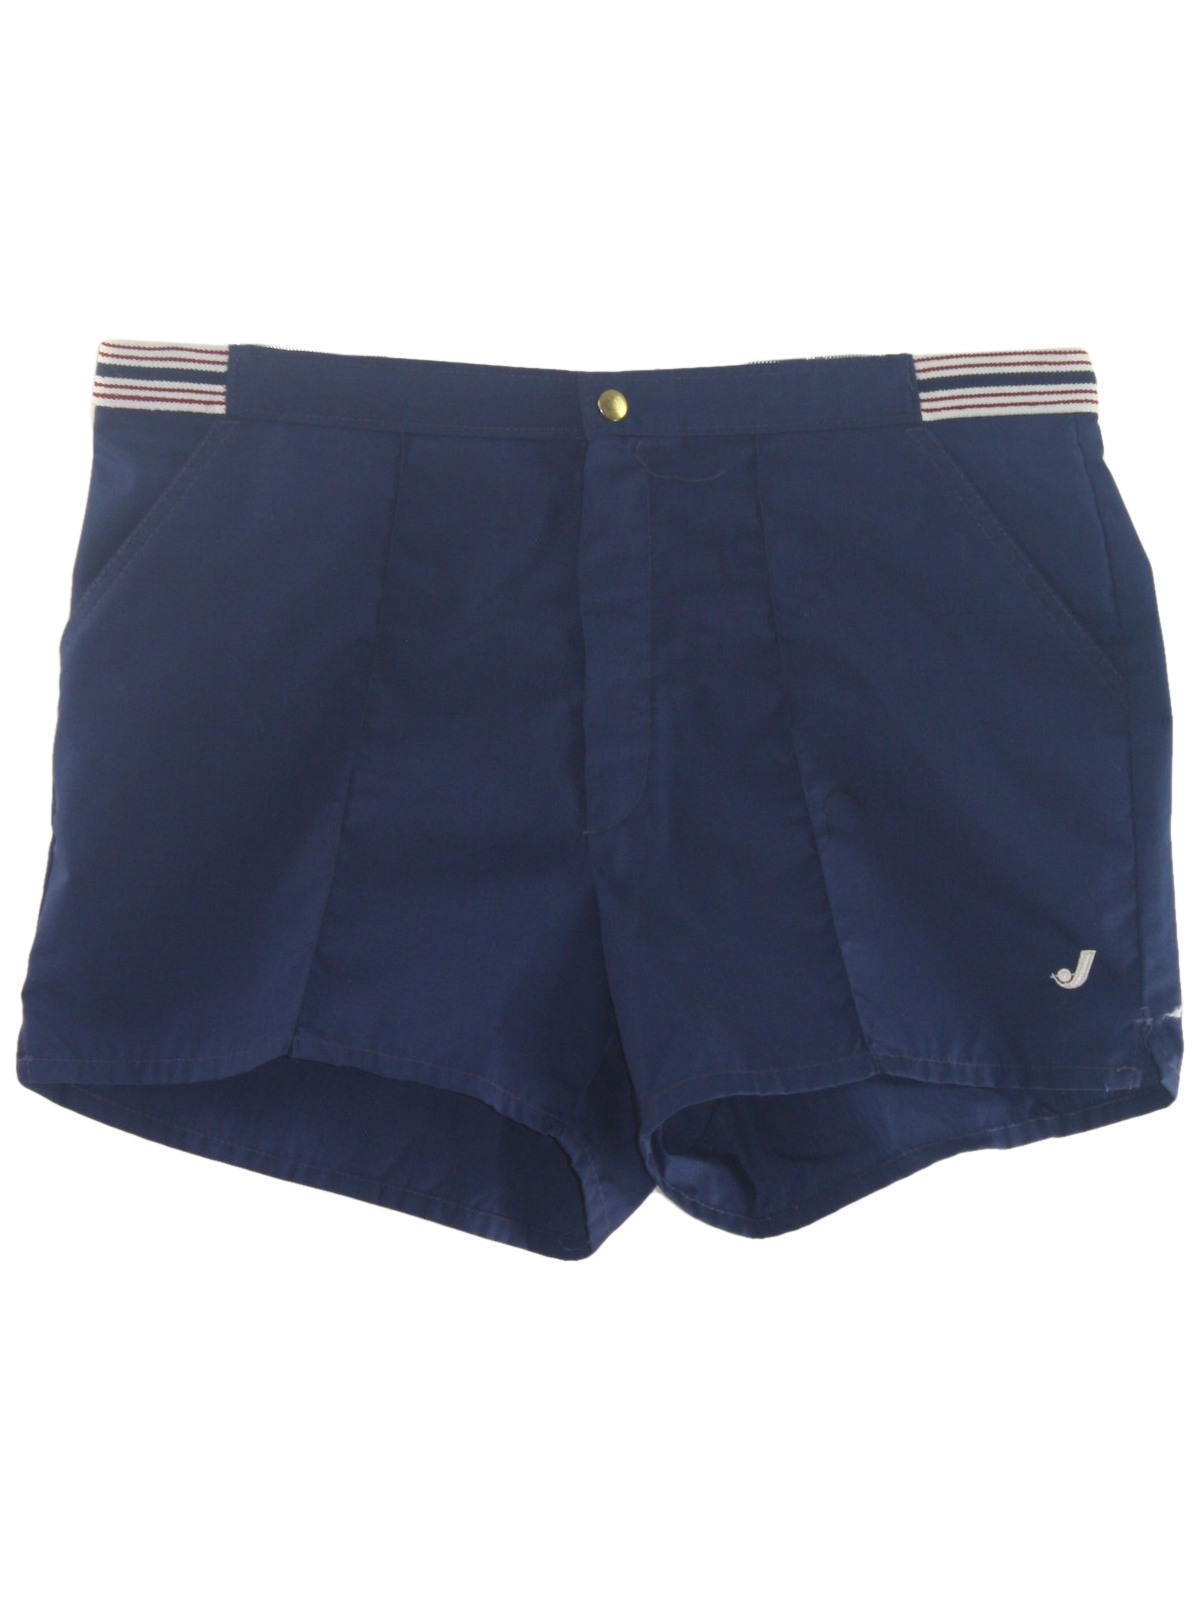 Retro 80's Shorts: 80s -Jantzen- Mens dark blue background with white ...